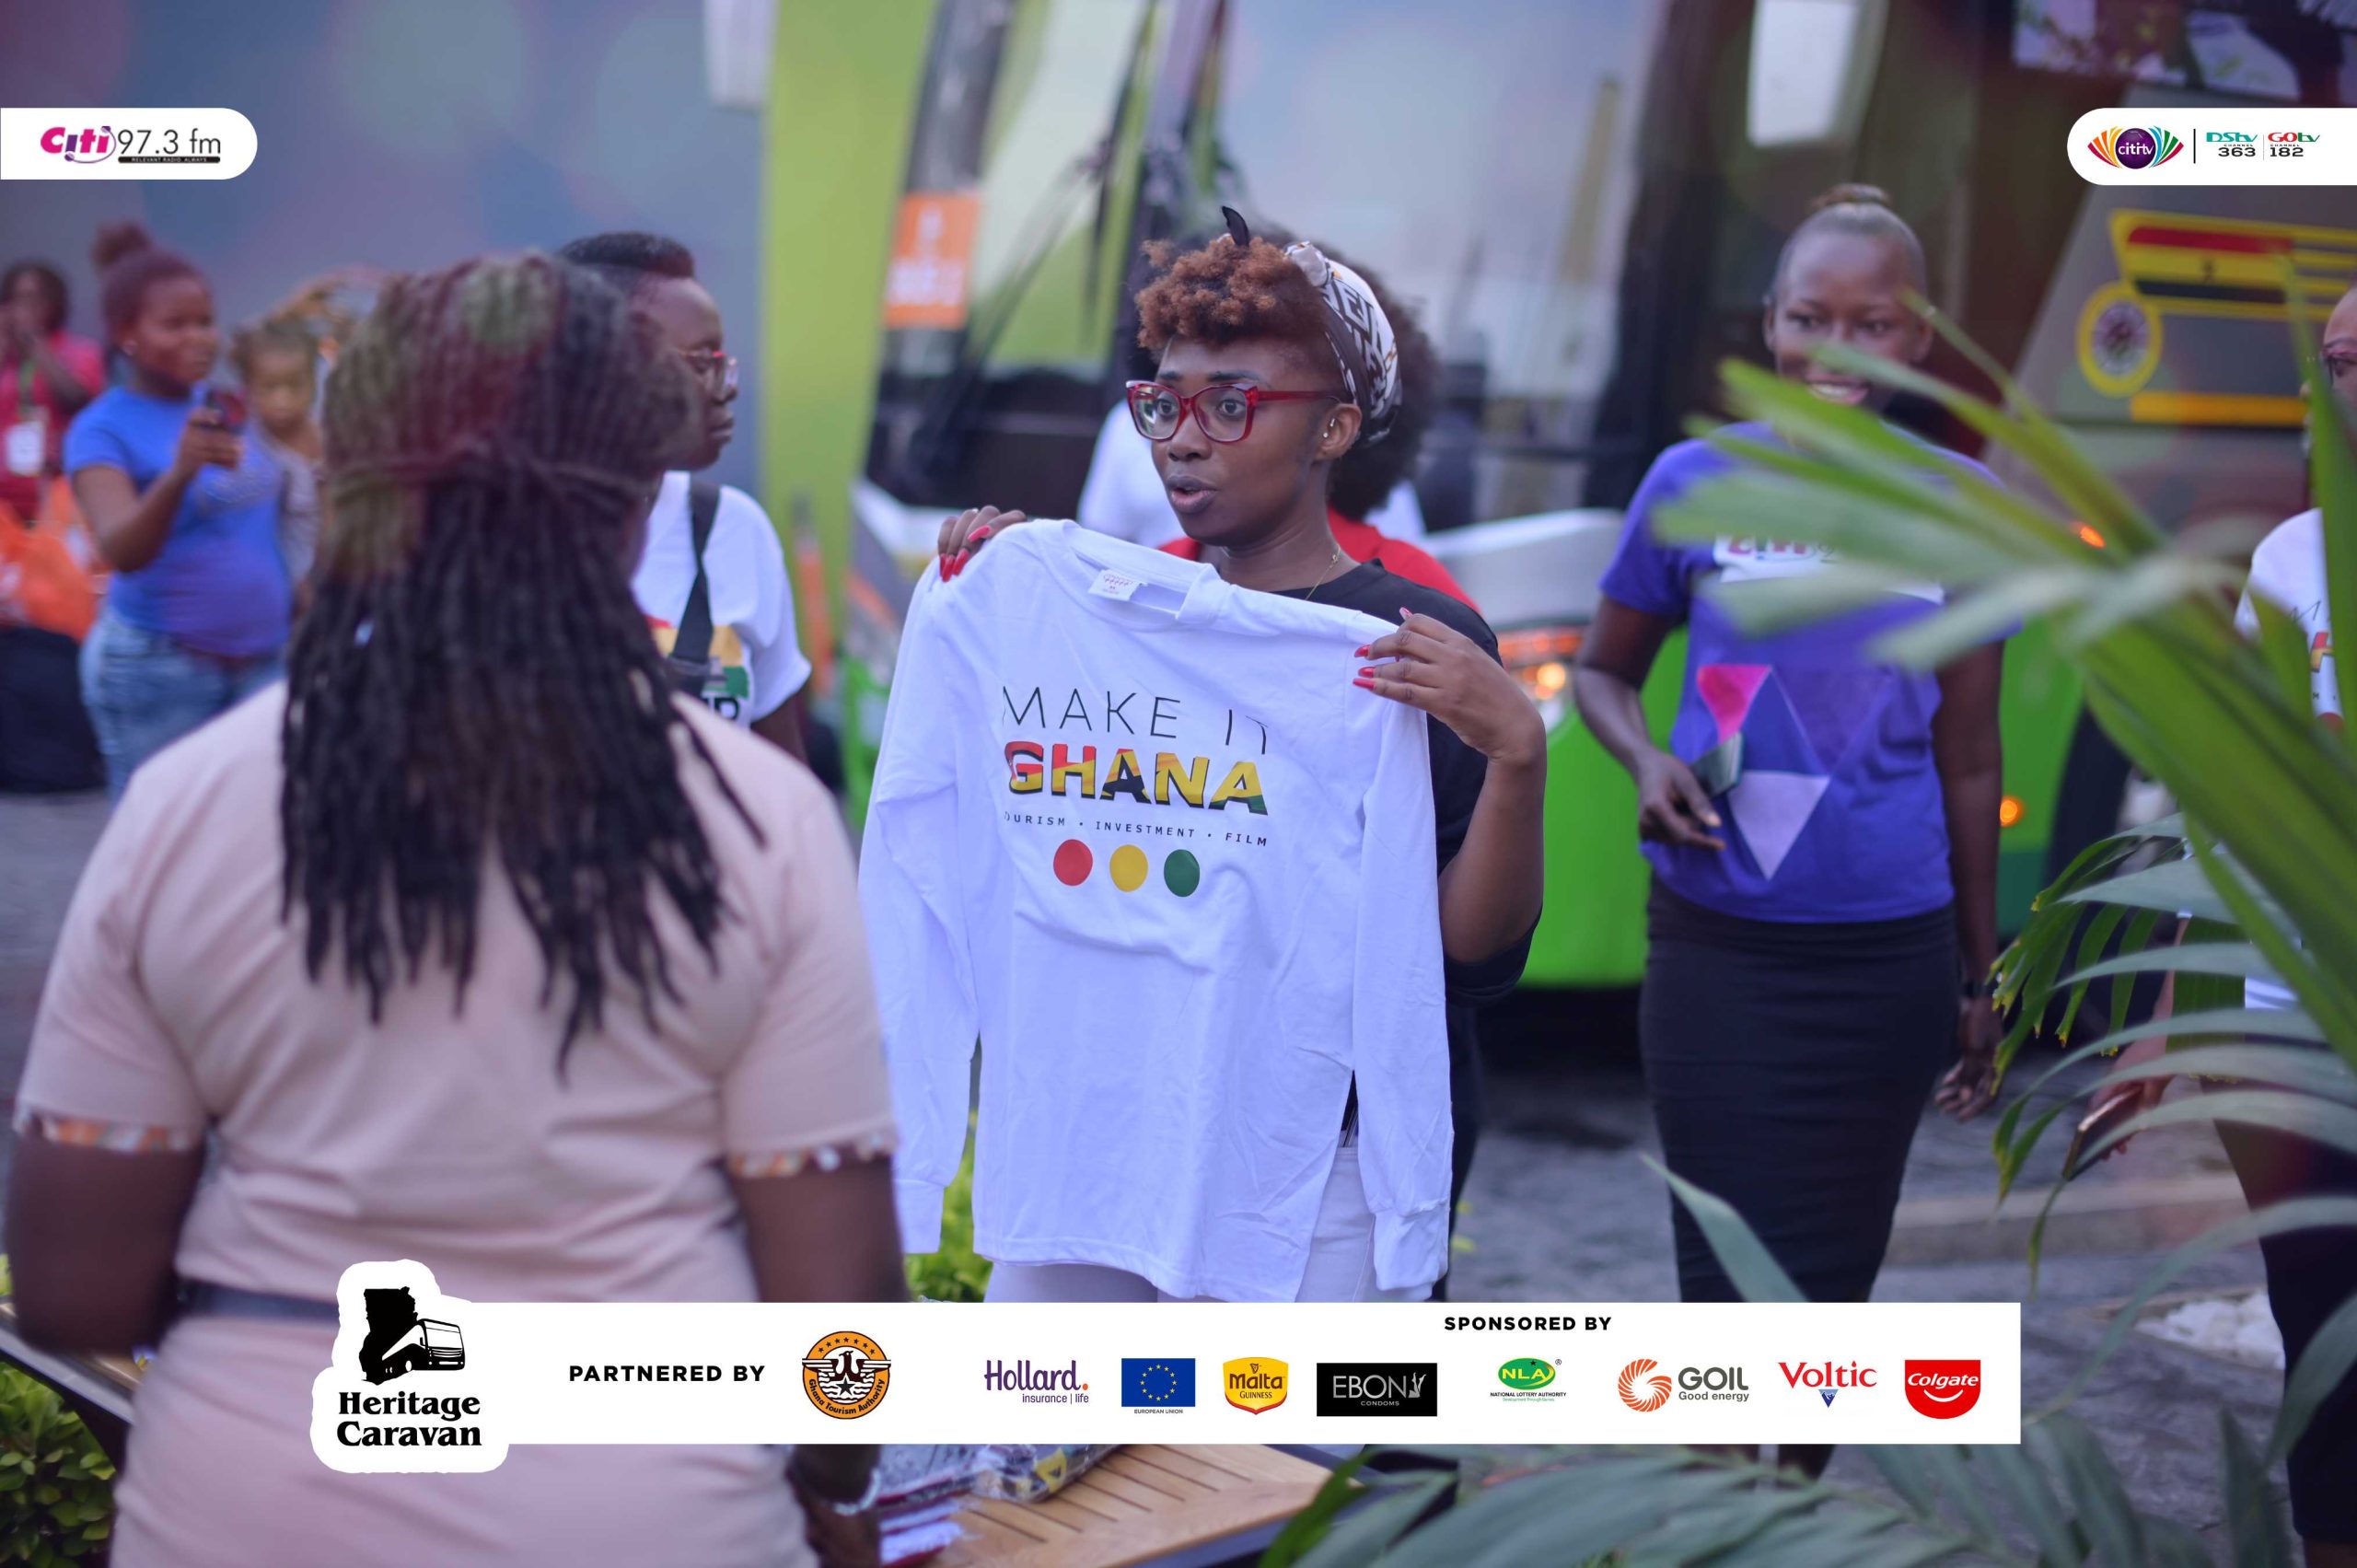 Heritage Caravan: We’ll choose Ghana over UK vacation every March